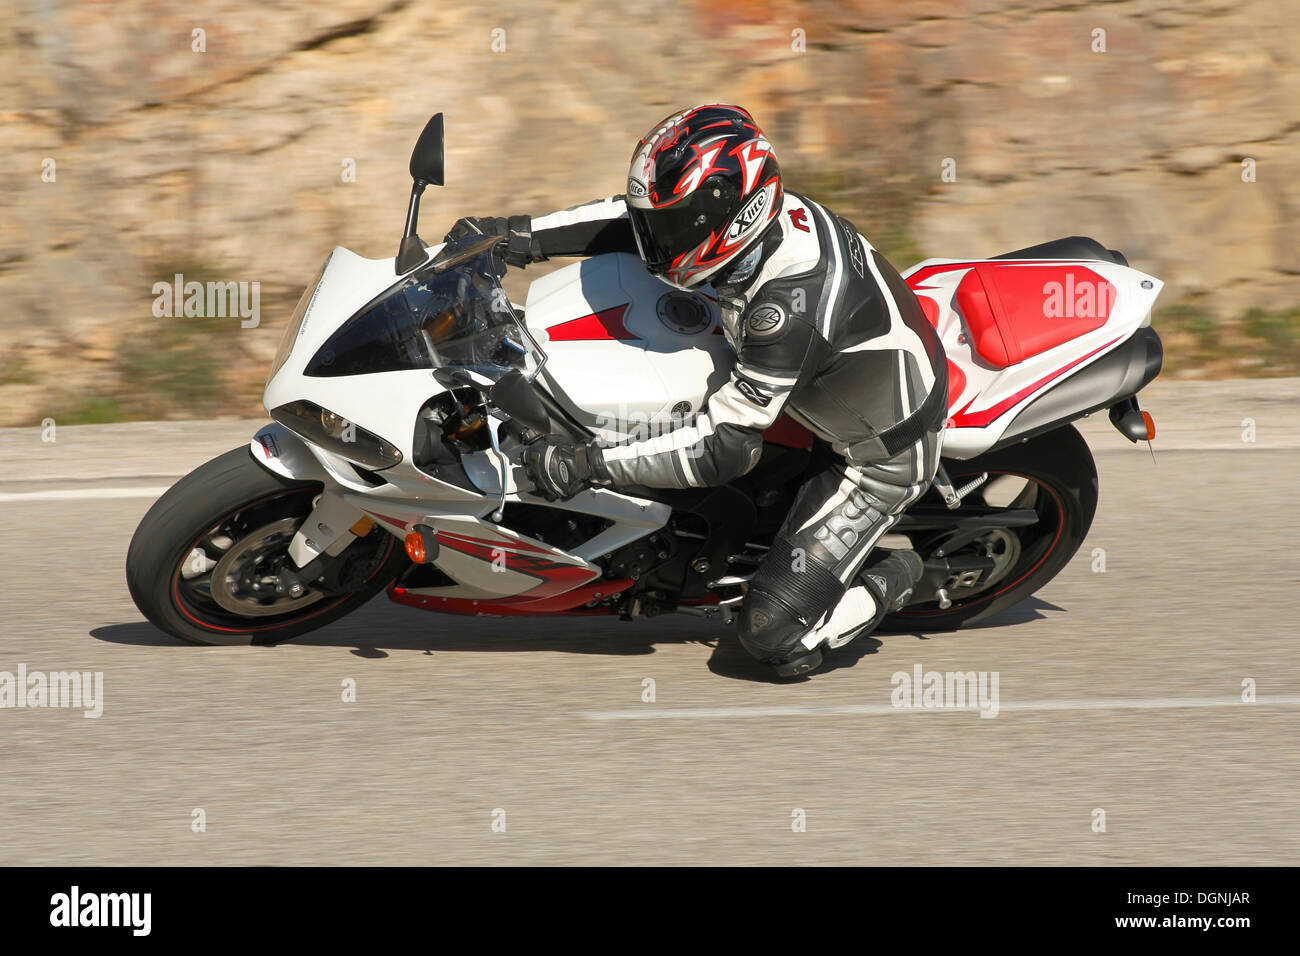 Yamaha YZF R1 2008, motorcycle Stock Photo